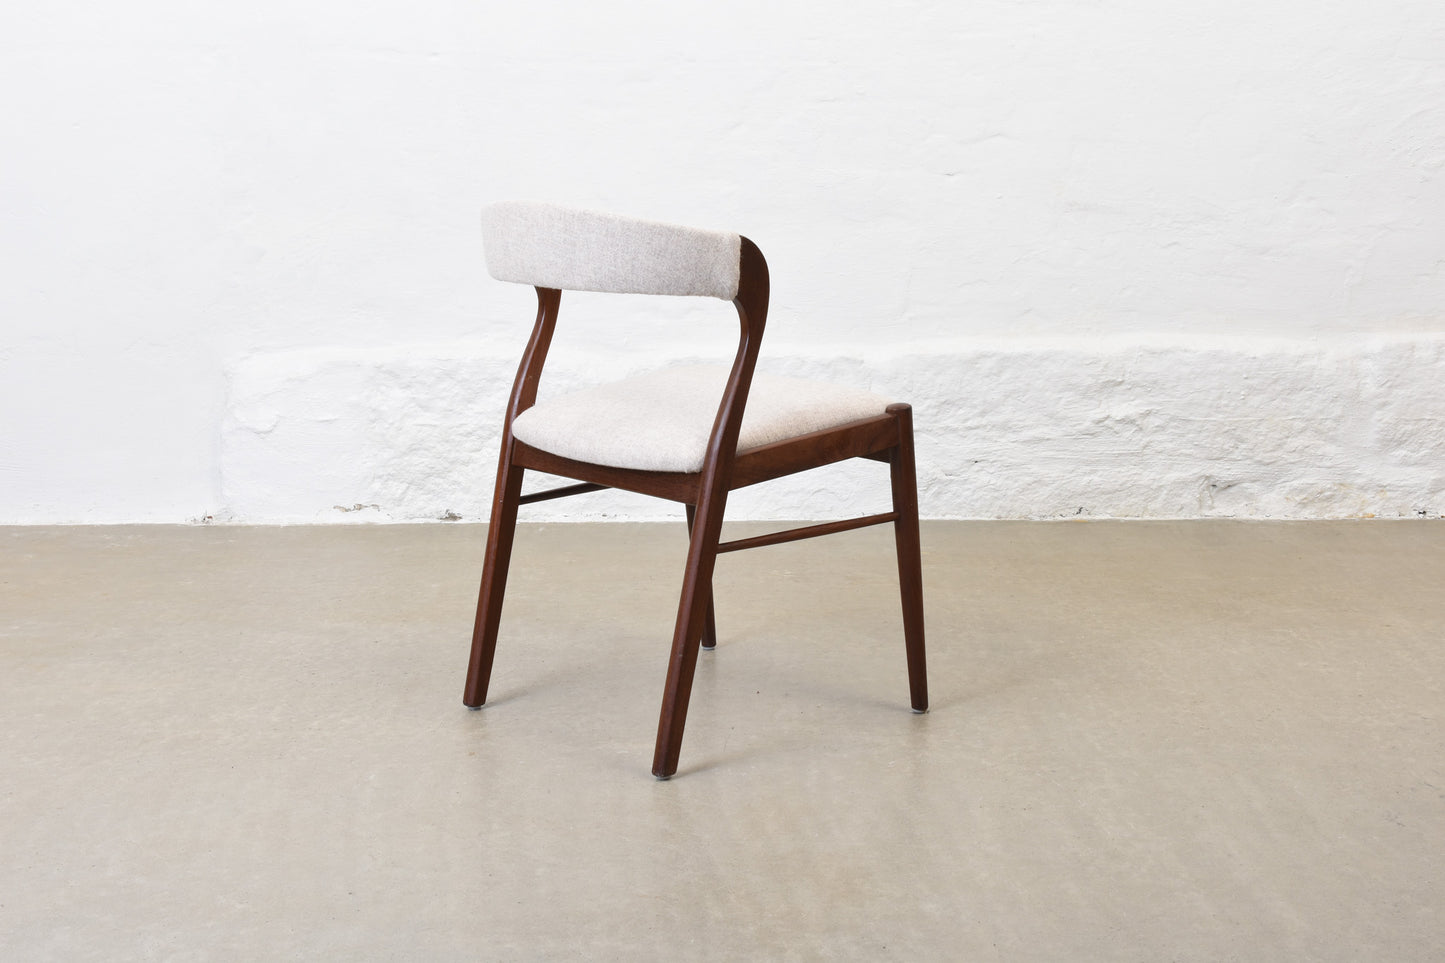 Newly reupholstered: 1950s teak + felt chair